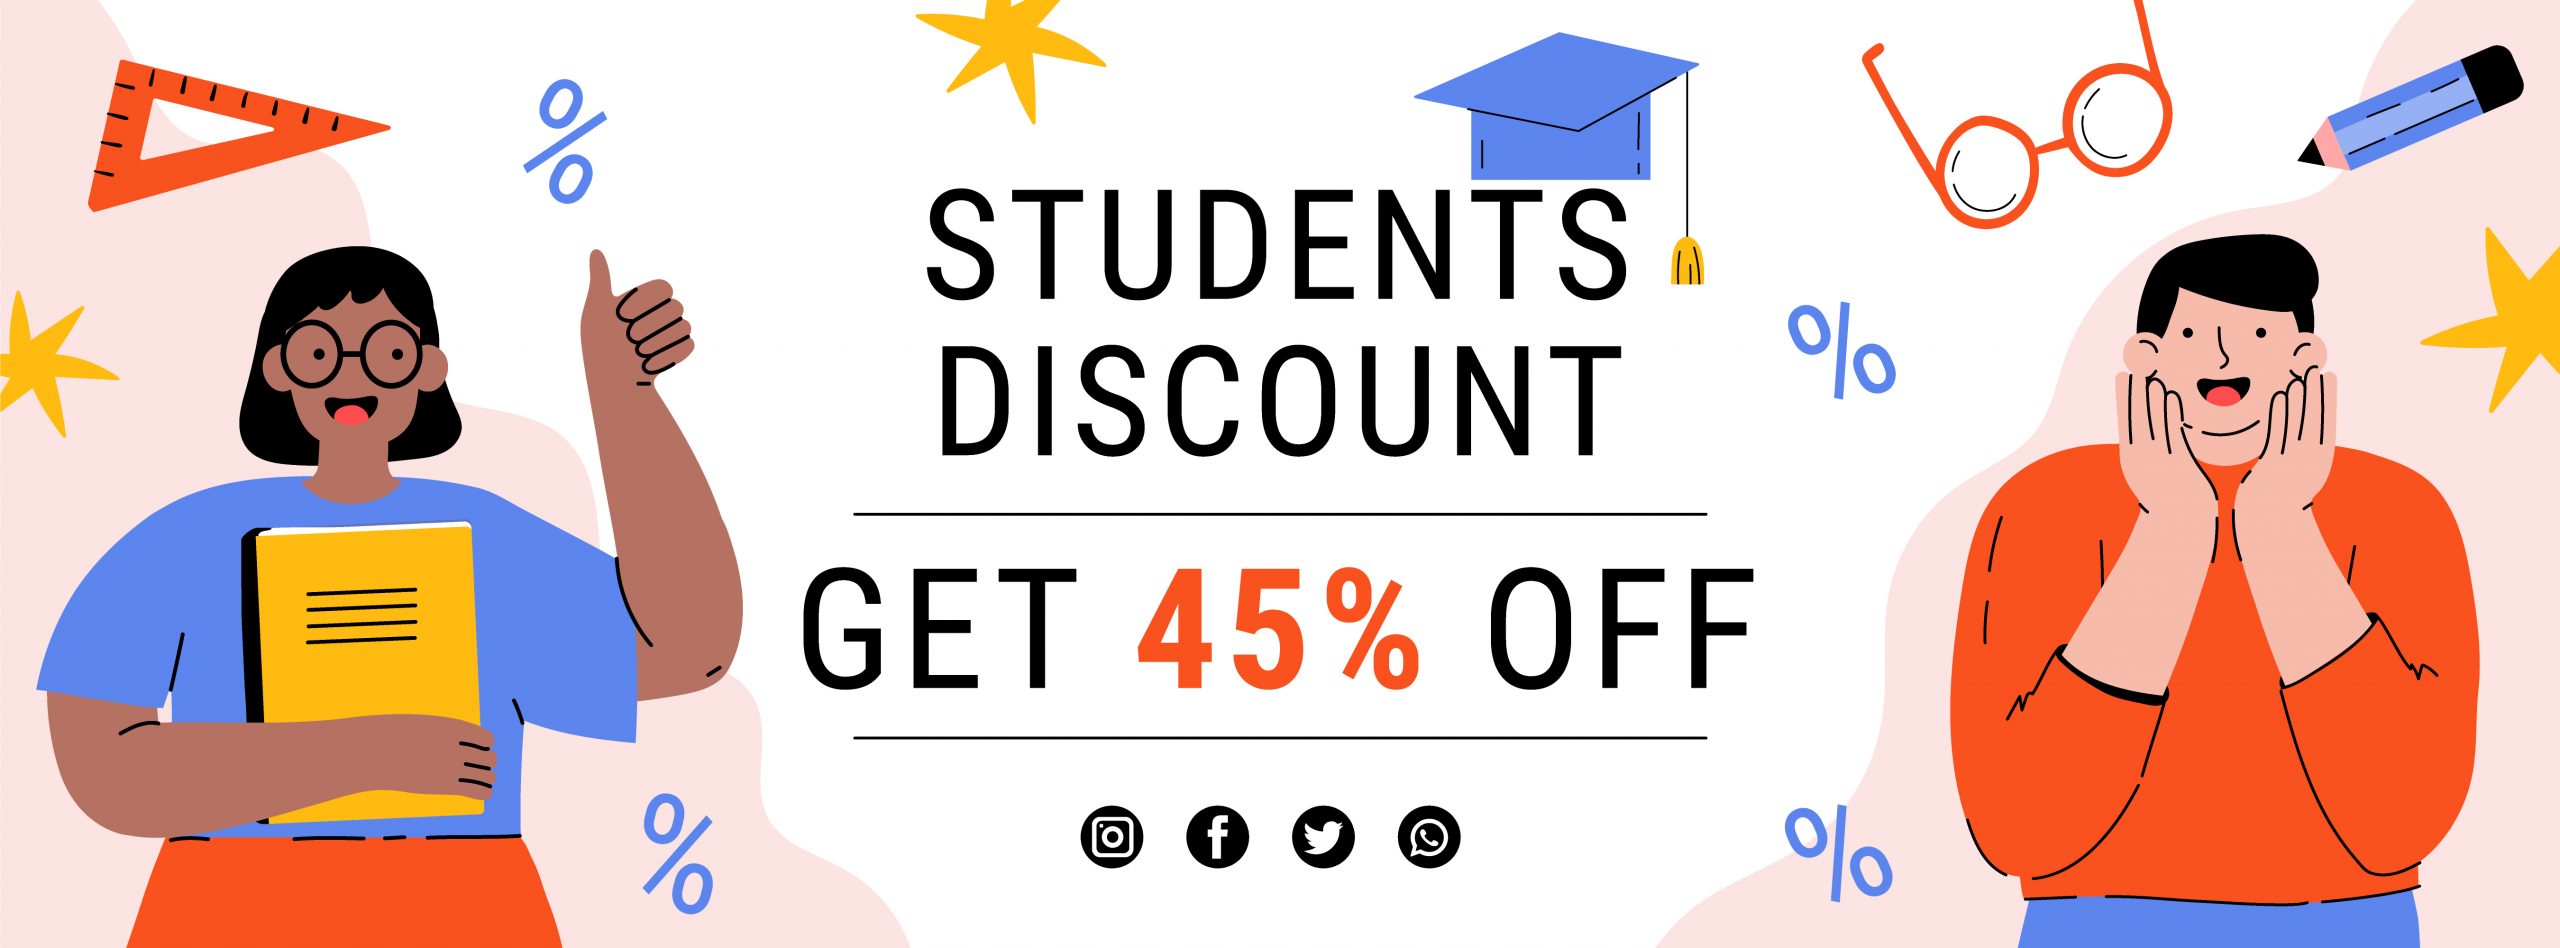 Student discount 